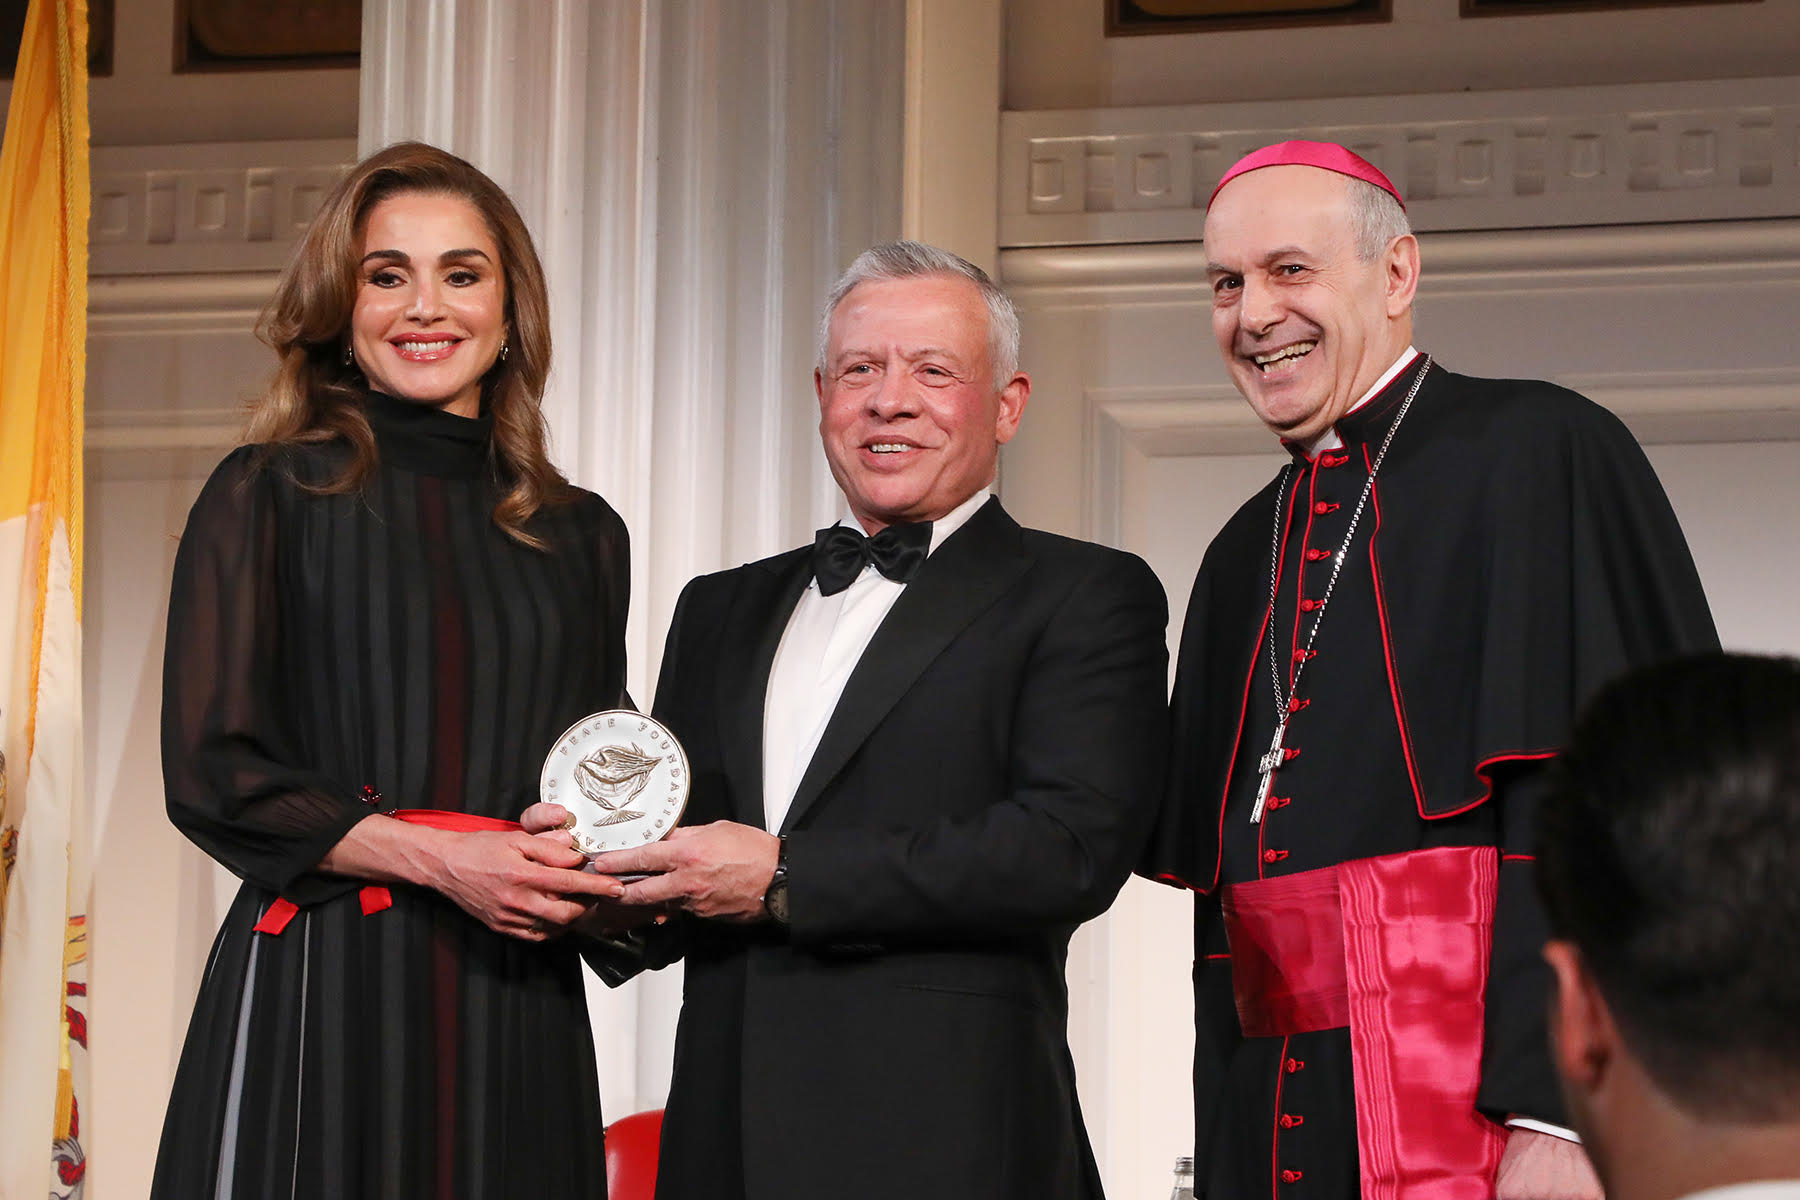 Their Majesties King Abdullah II ibn Al Hussein and Queen Rania Al Abdullah, King and Queen of the Kingdom of Jordan, and His Excellency Archbishop Caccia